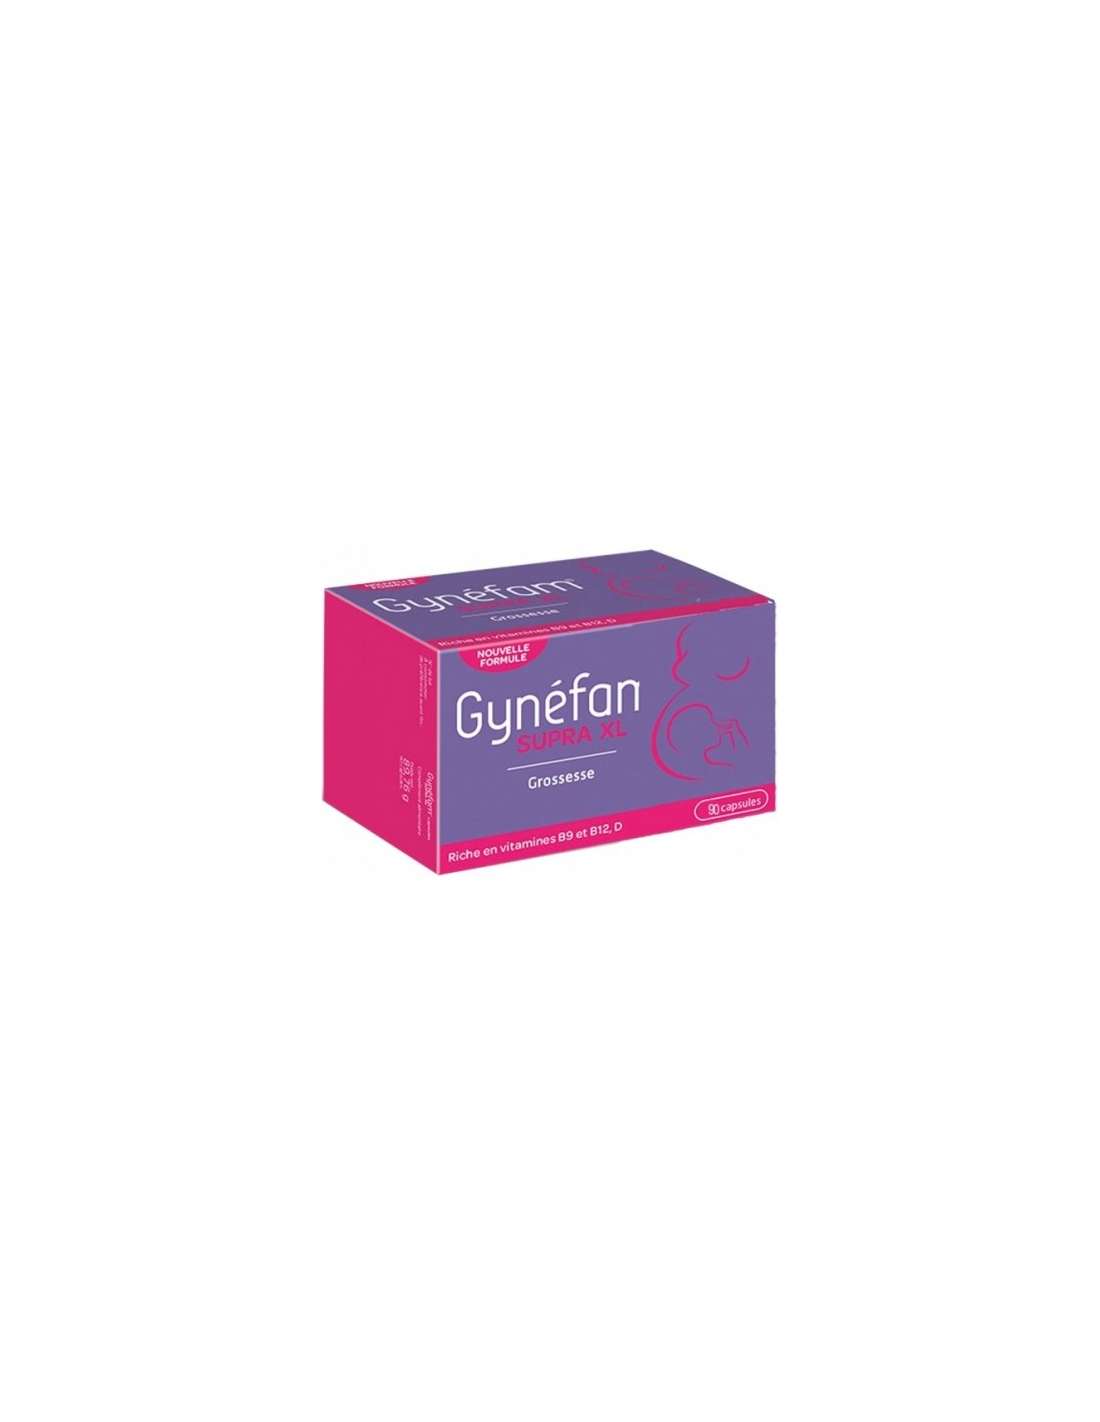 Gynefam Supra XL: Pregnancy Supplement Vitamin B9 and D, Iodine - 90